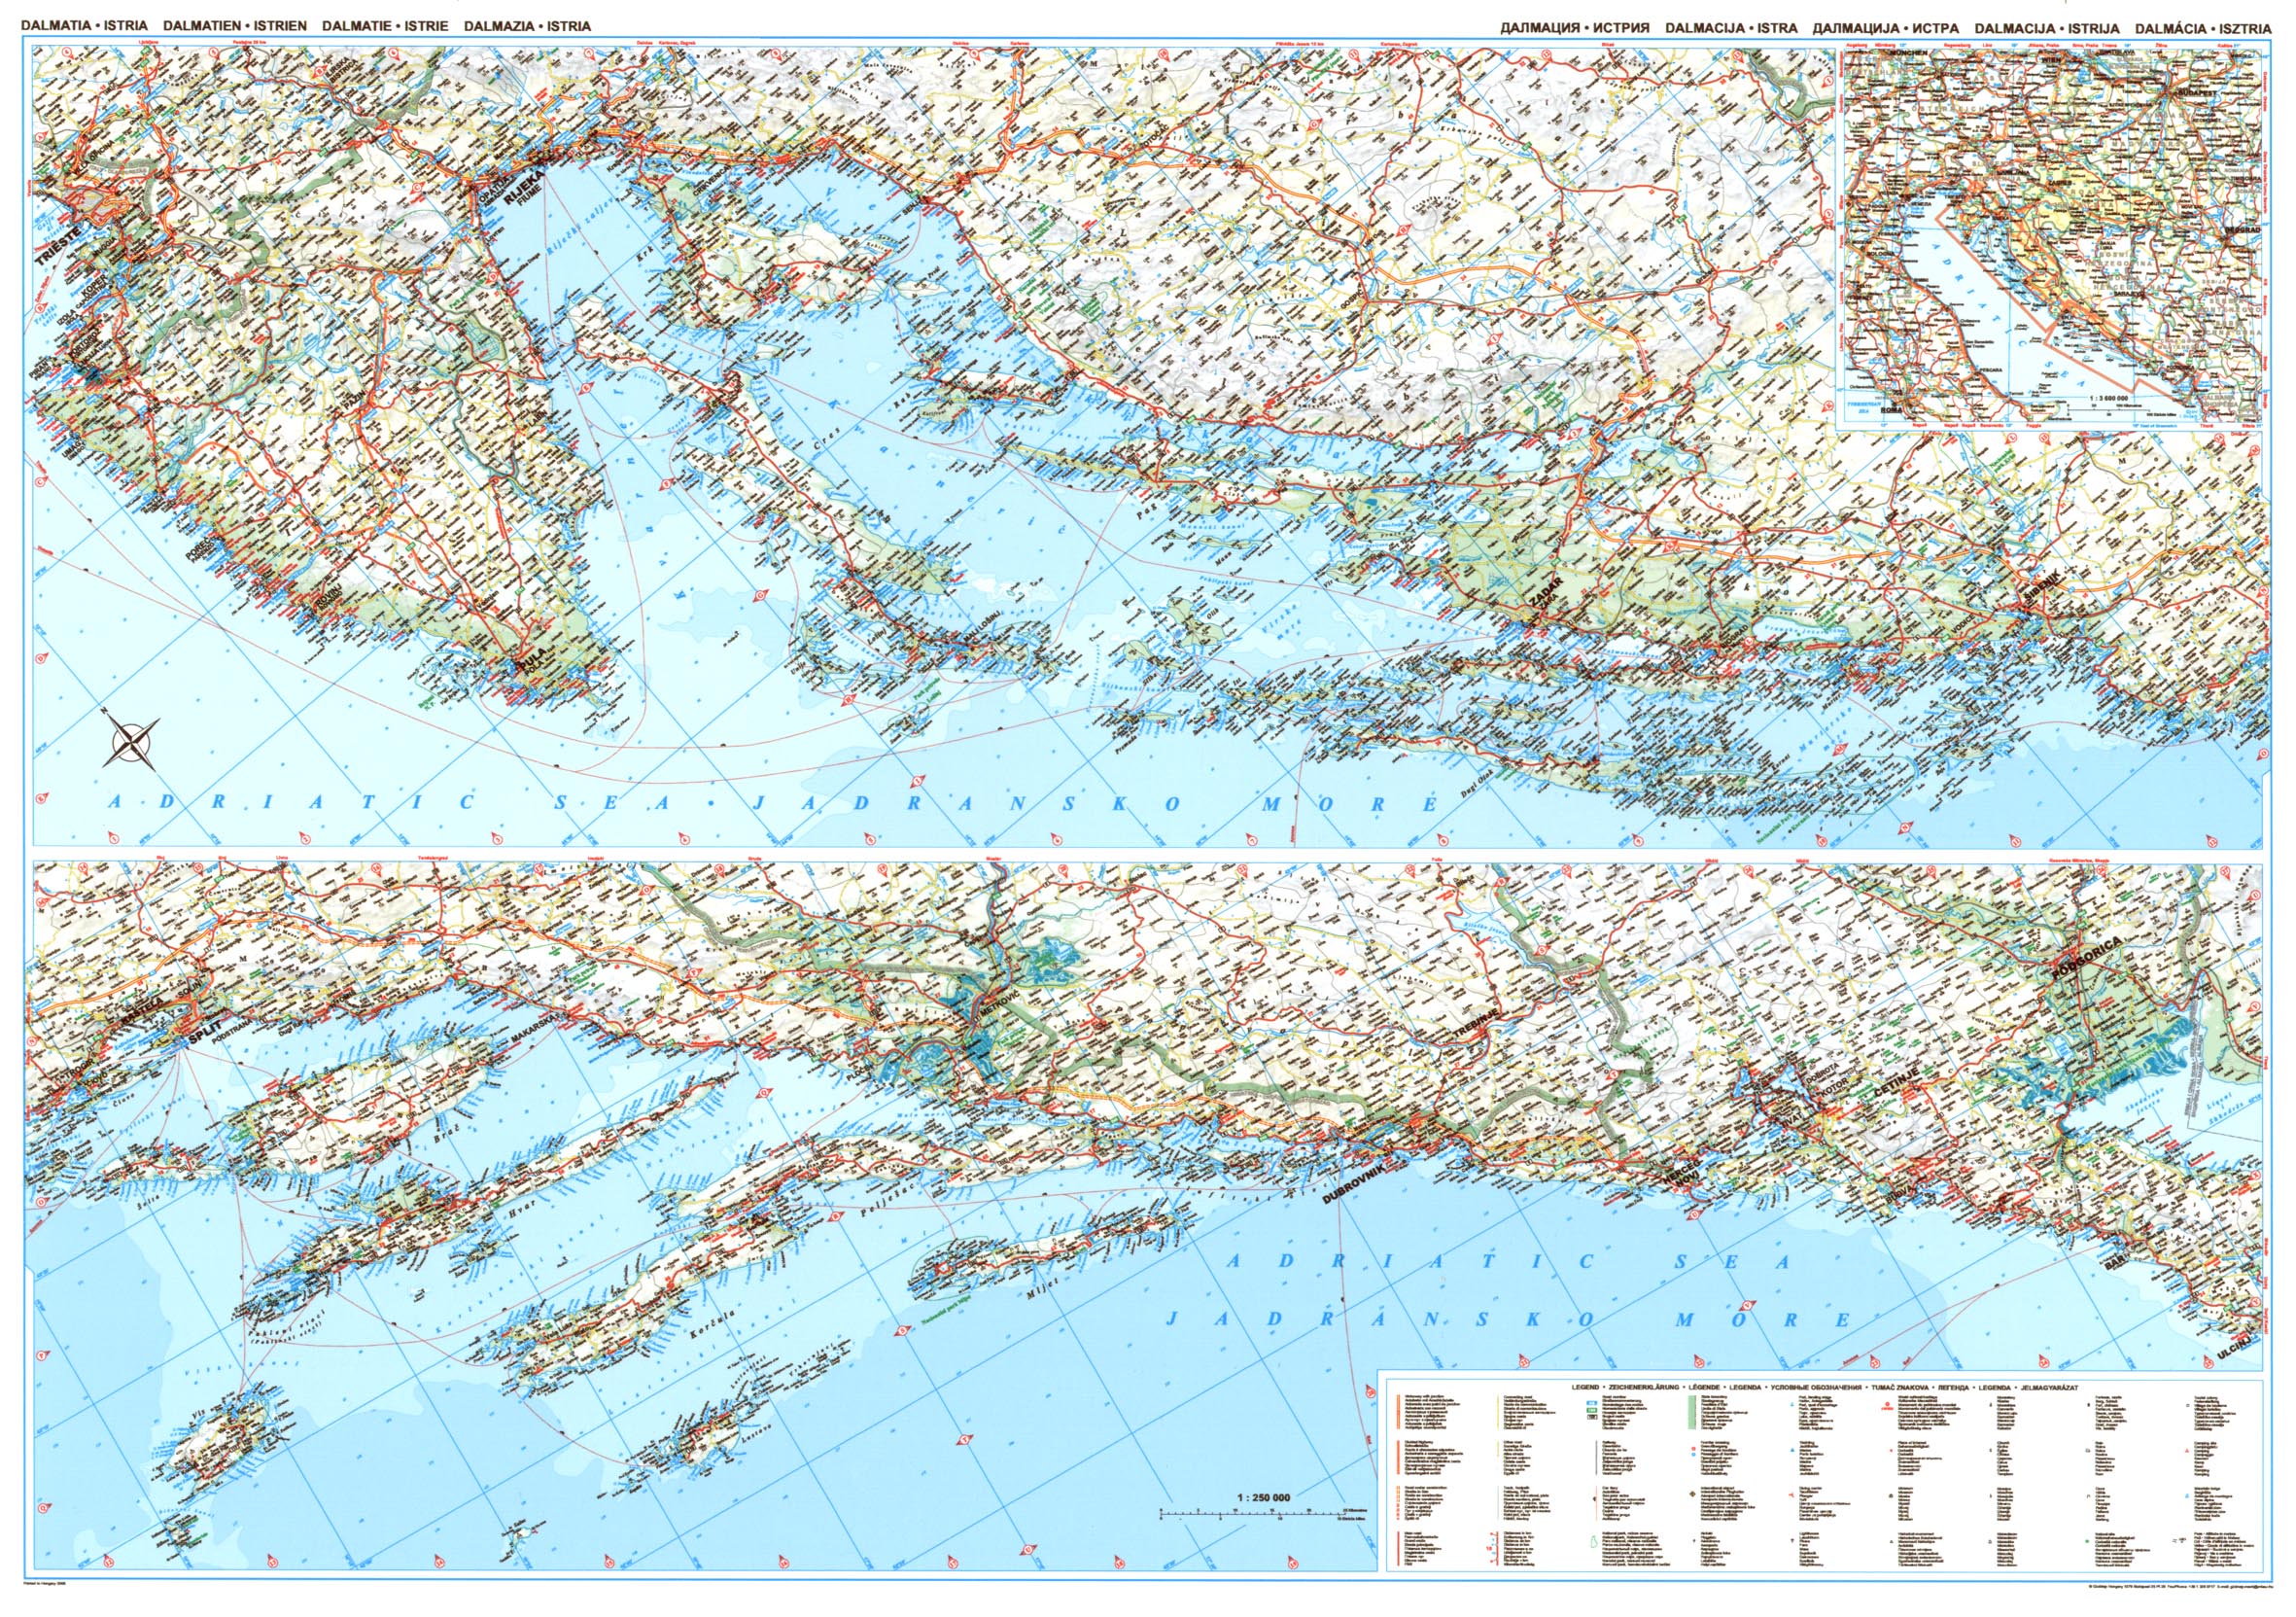 Dalmatia overview map